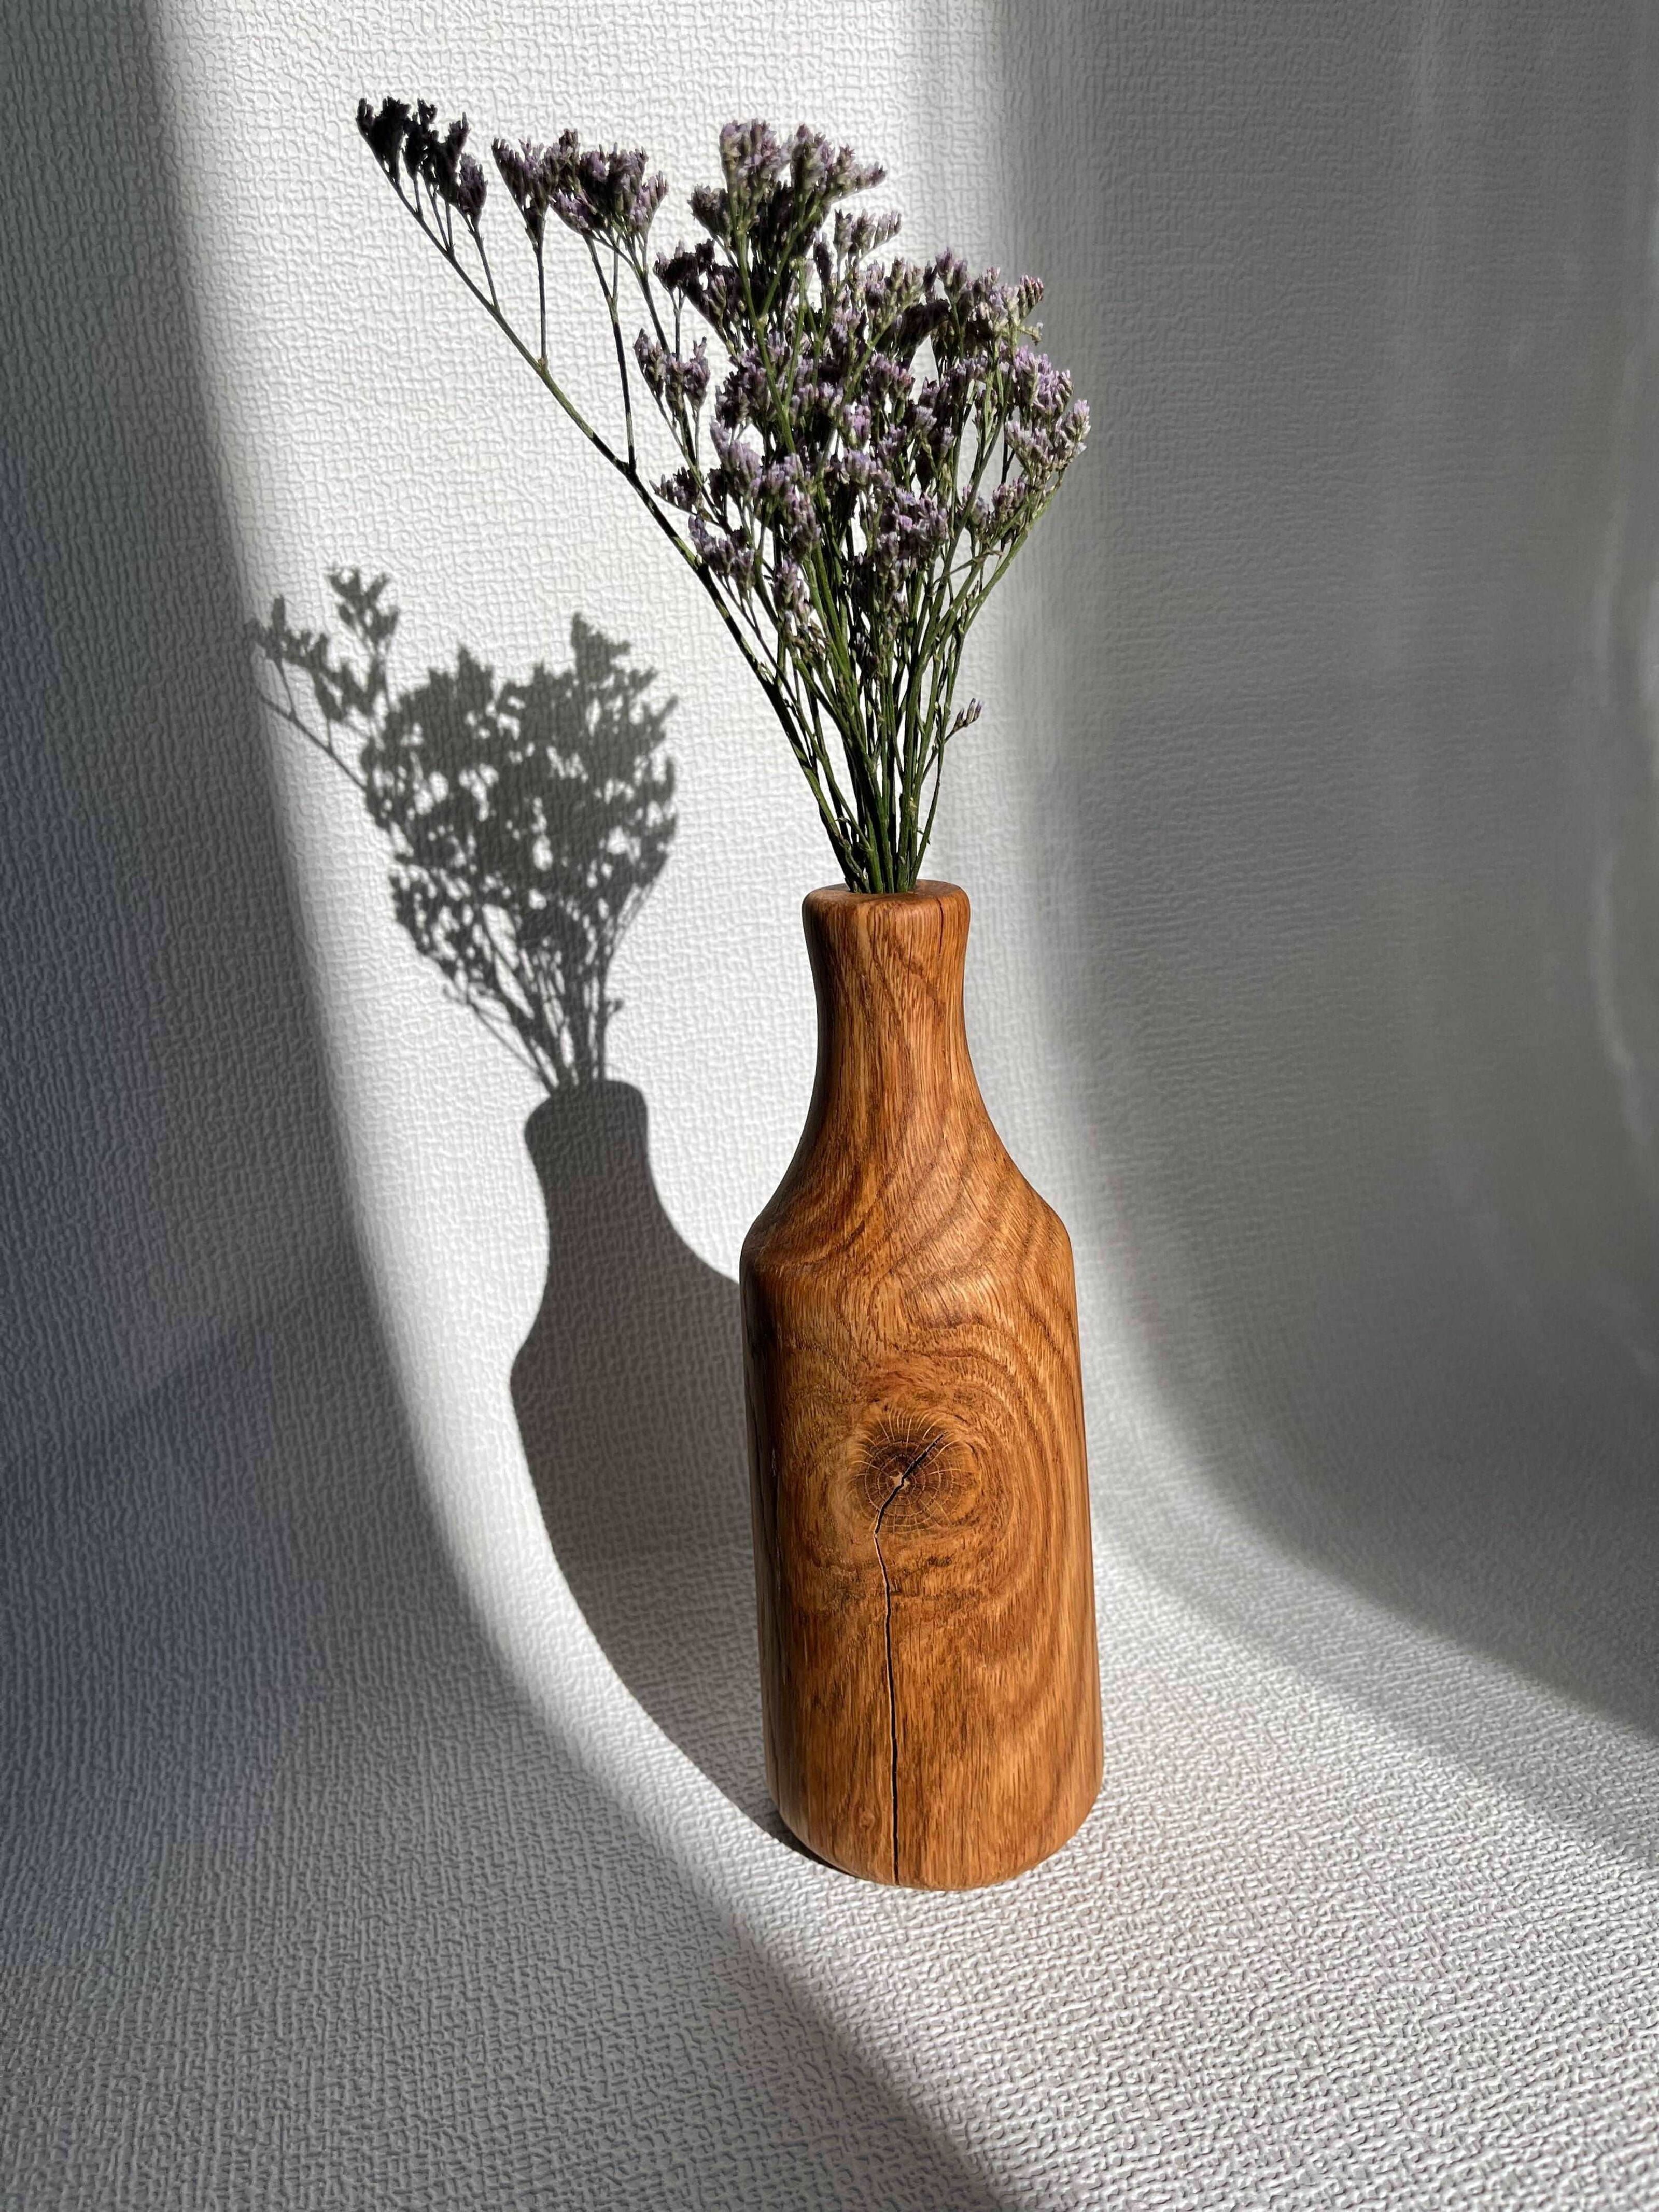 Wedelia. in oak bottle-shaped The vase Buy red wholesale wood